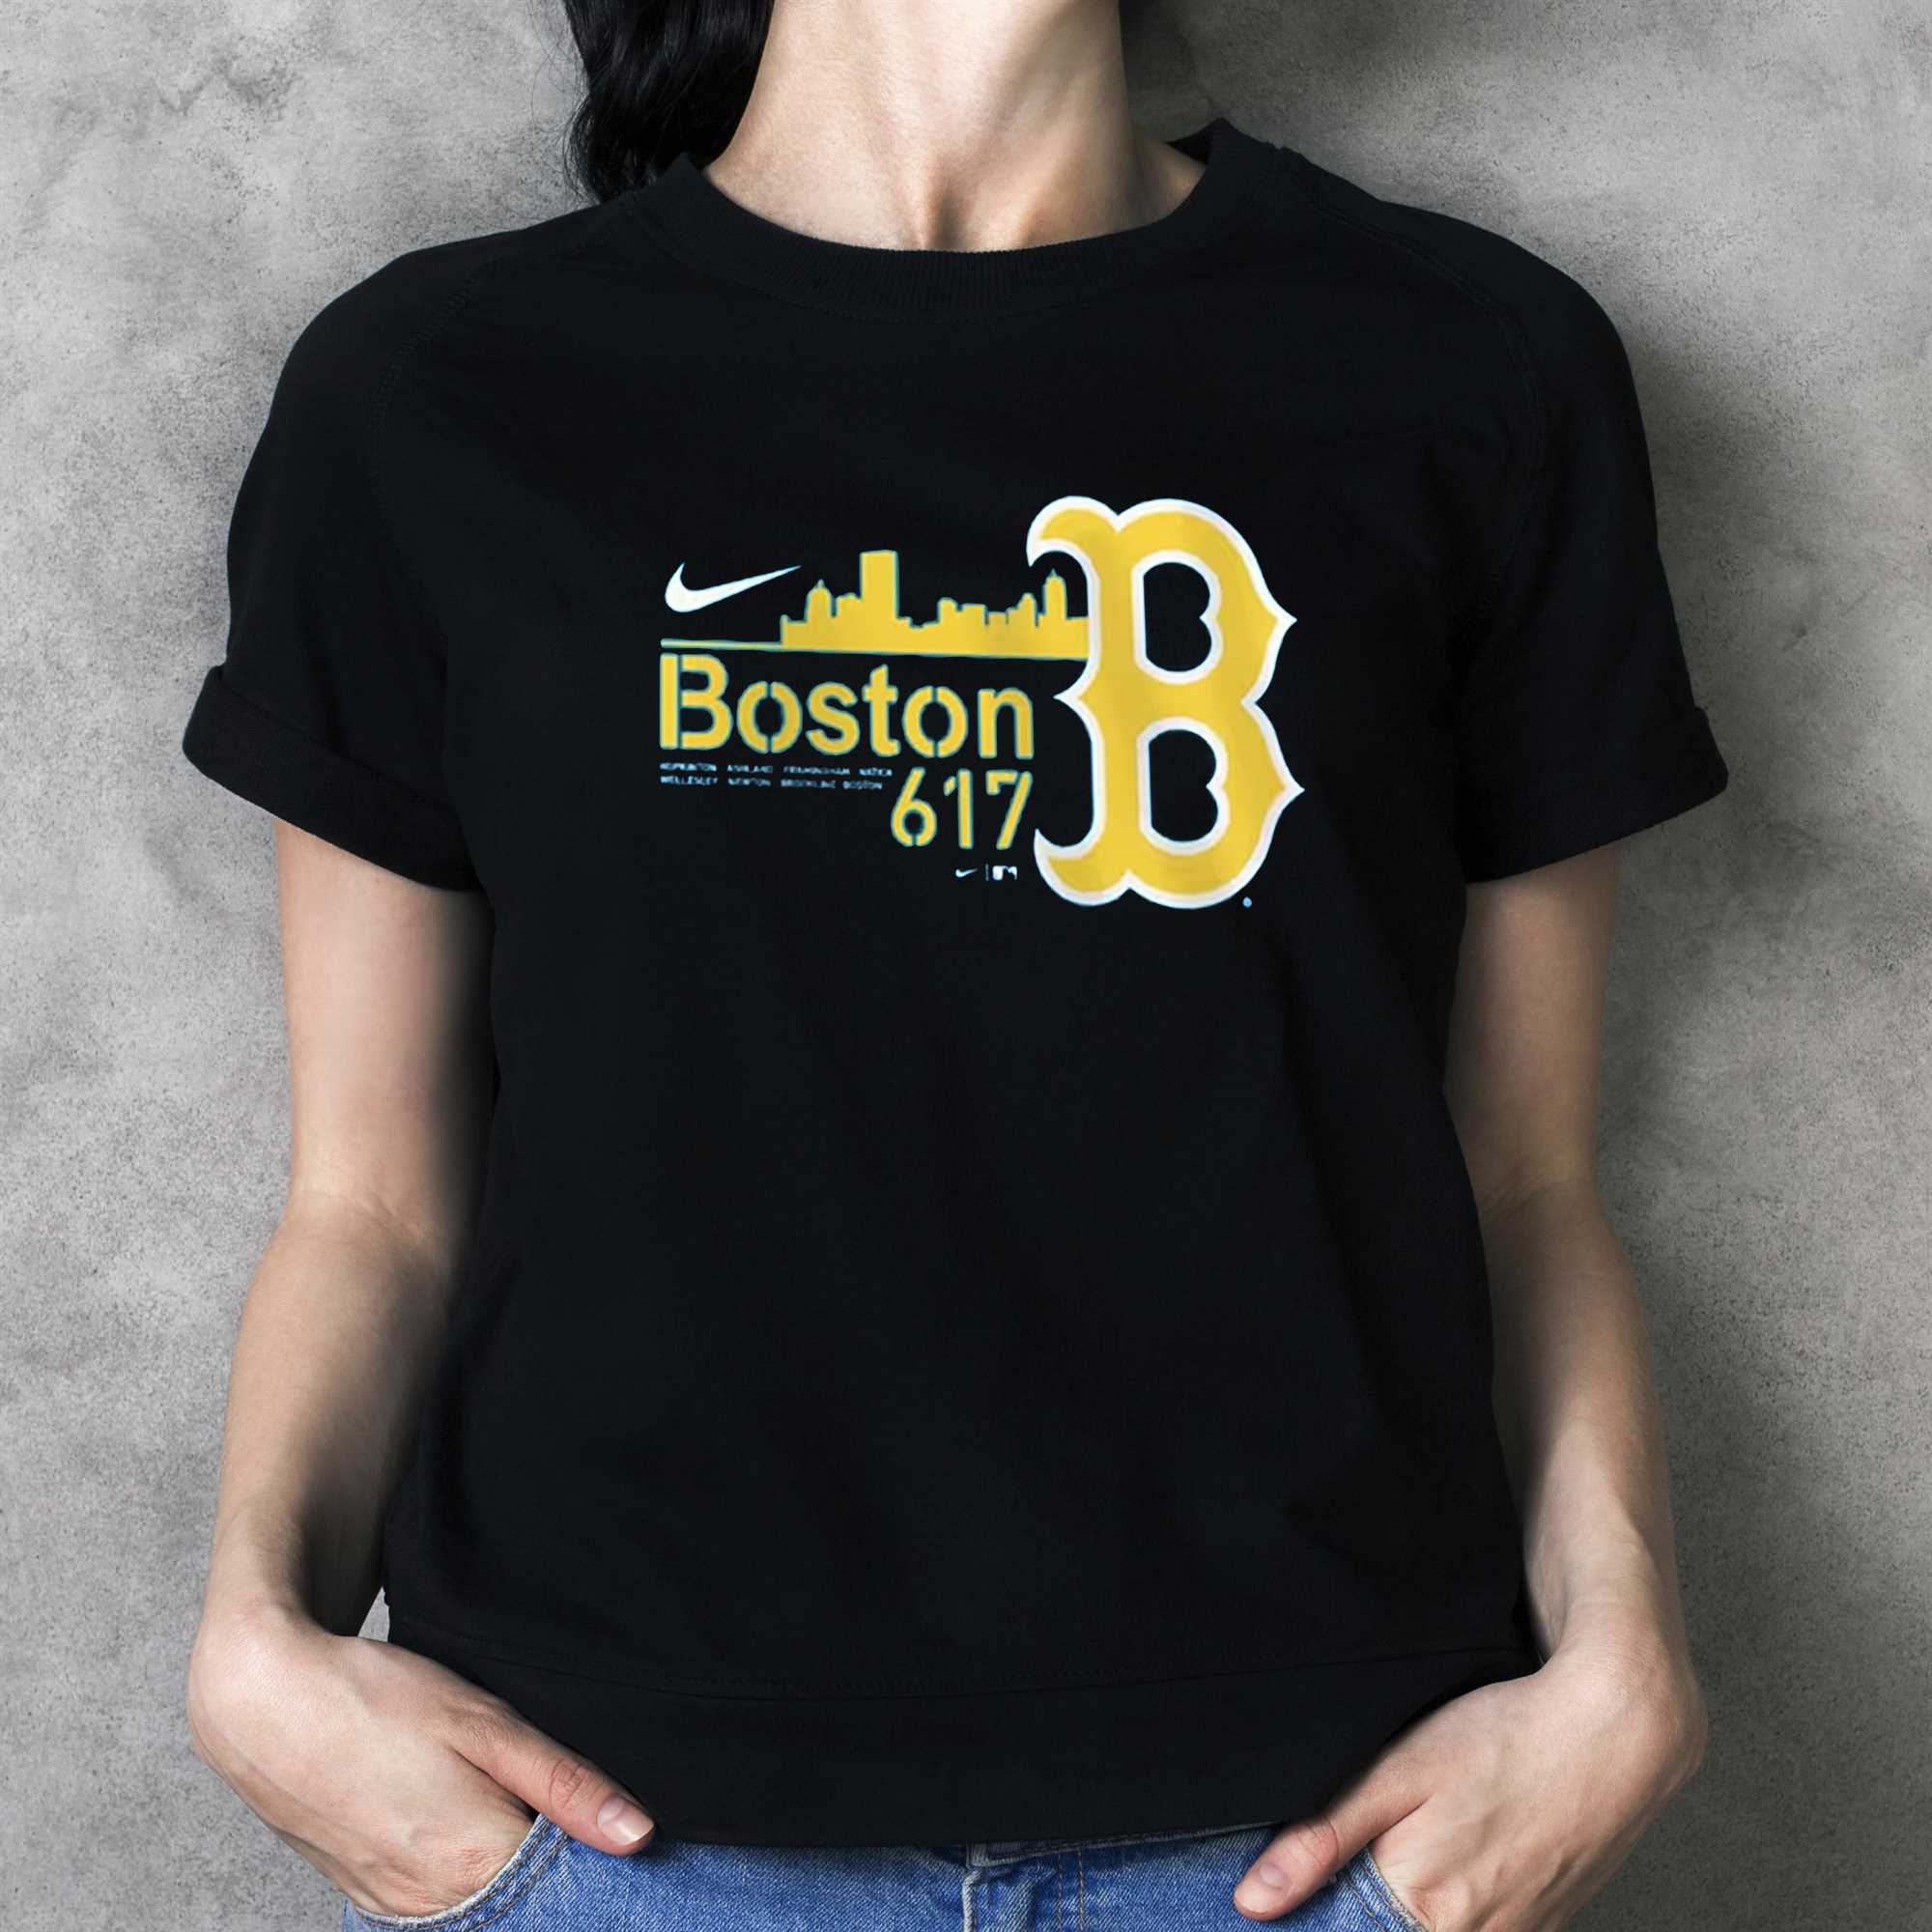 Nike Men's Red Boston Sox Icon Legend T-shirt